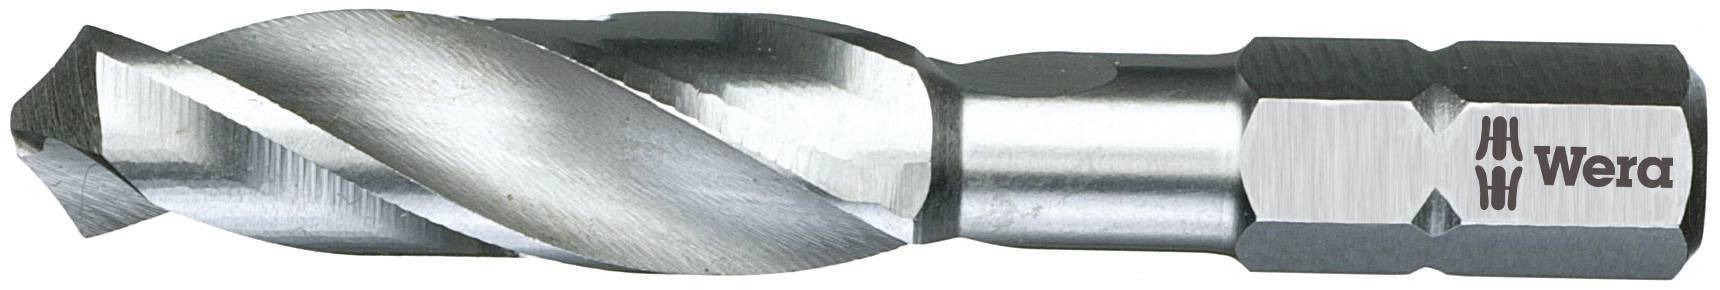 WERA HSS Metall-Spiralbohrer 6.8 mm 05104619001 Gesamtlänge 50 mm 1/4\" (6.3 mm) 1 St. (05104619001)